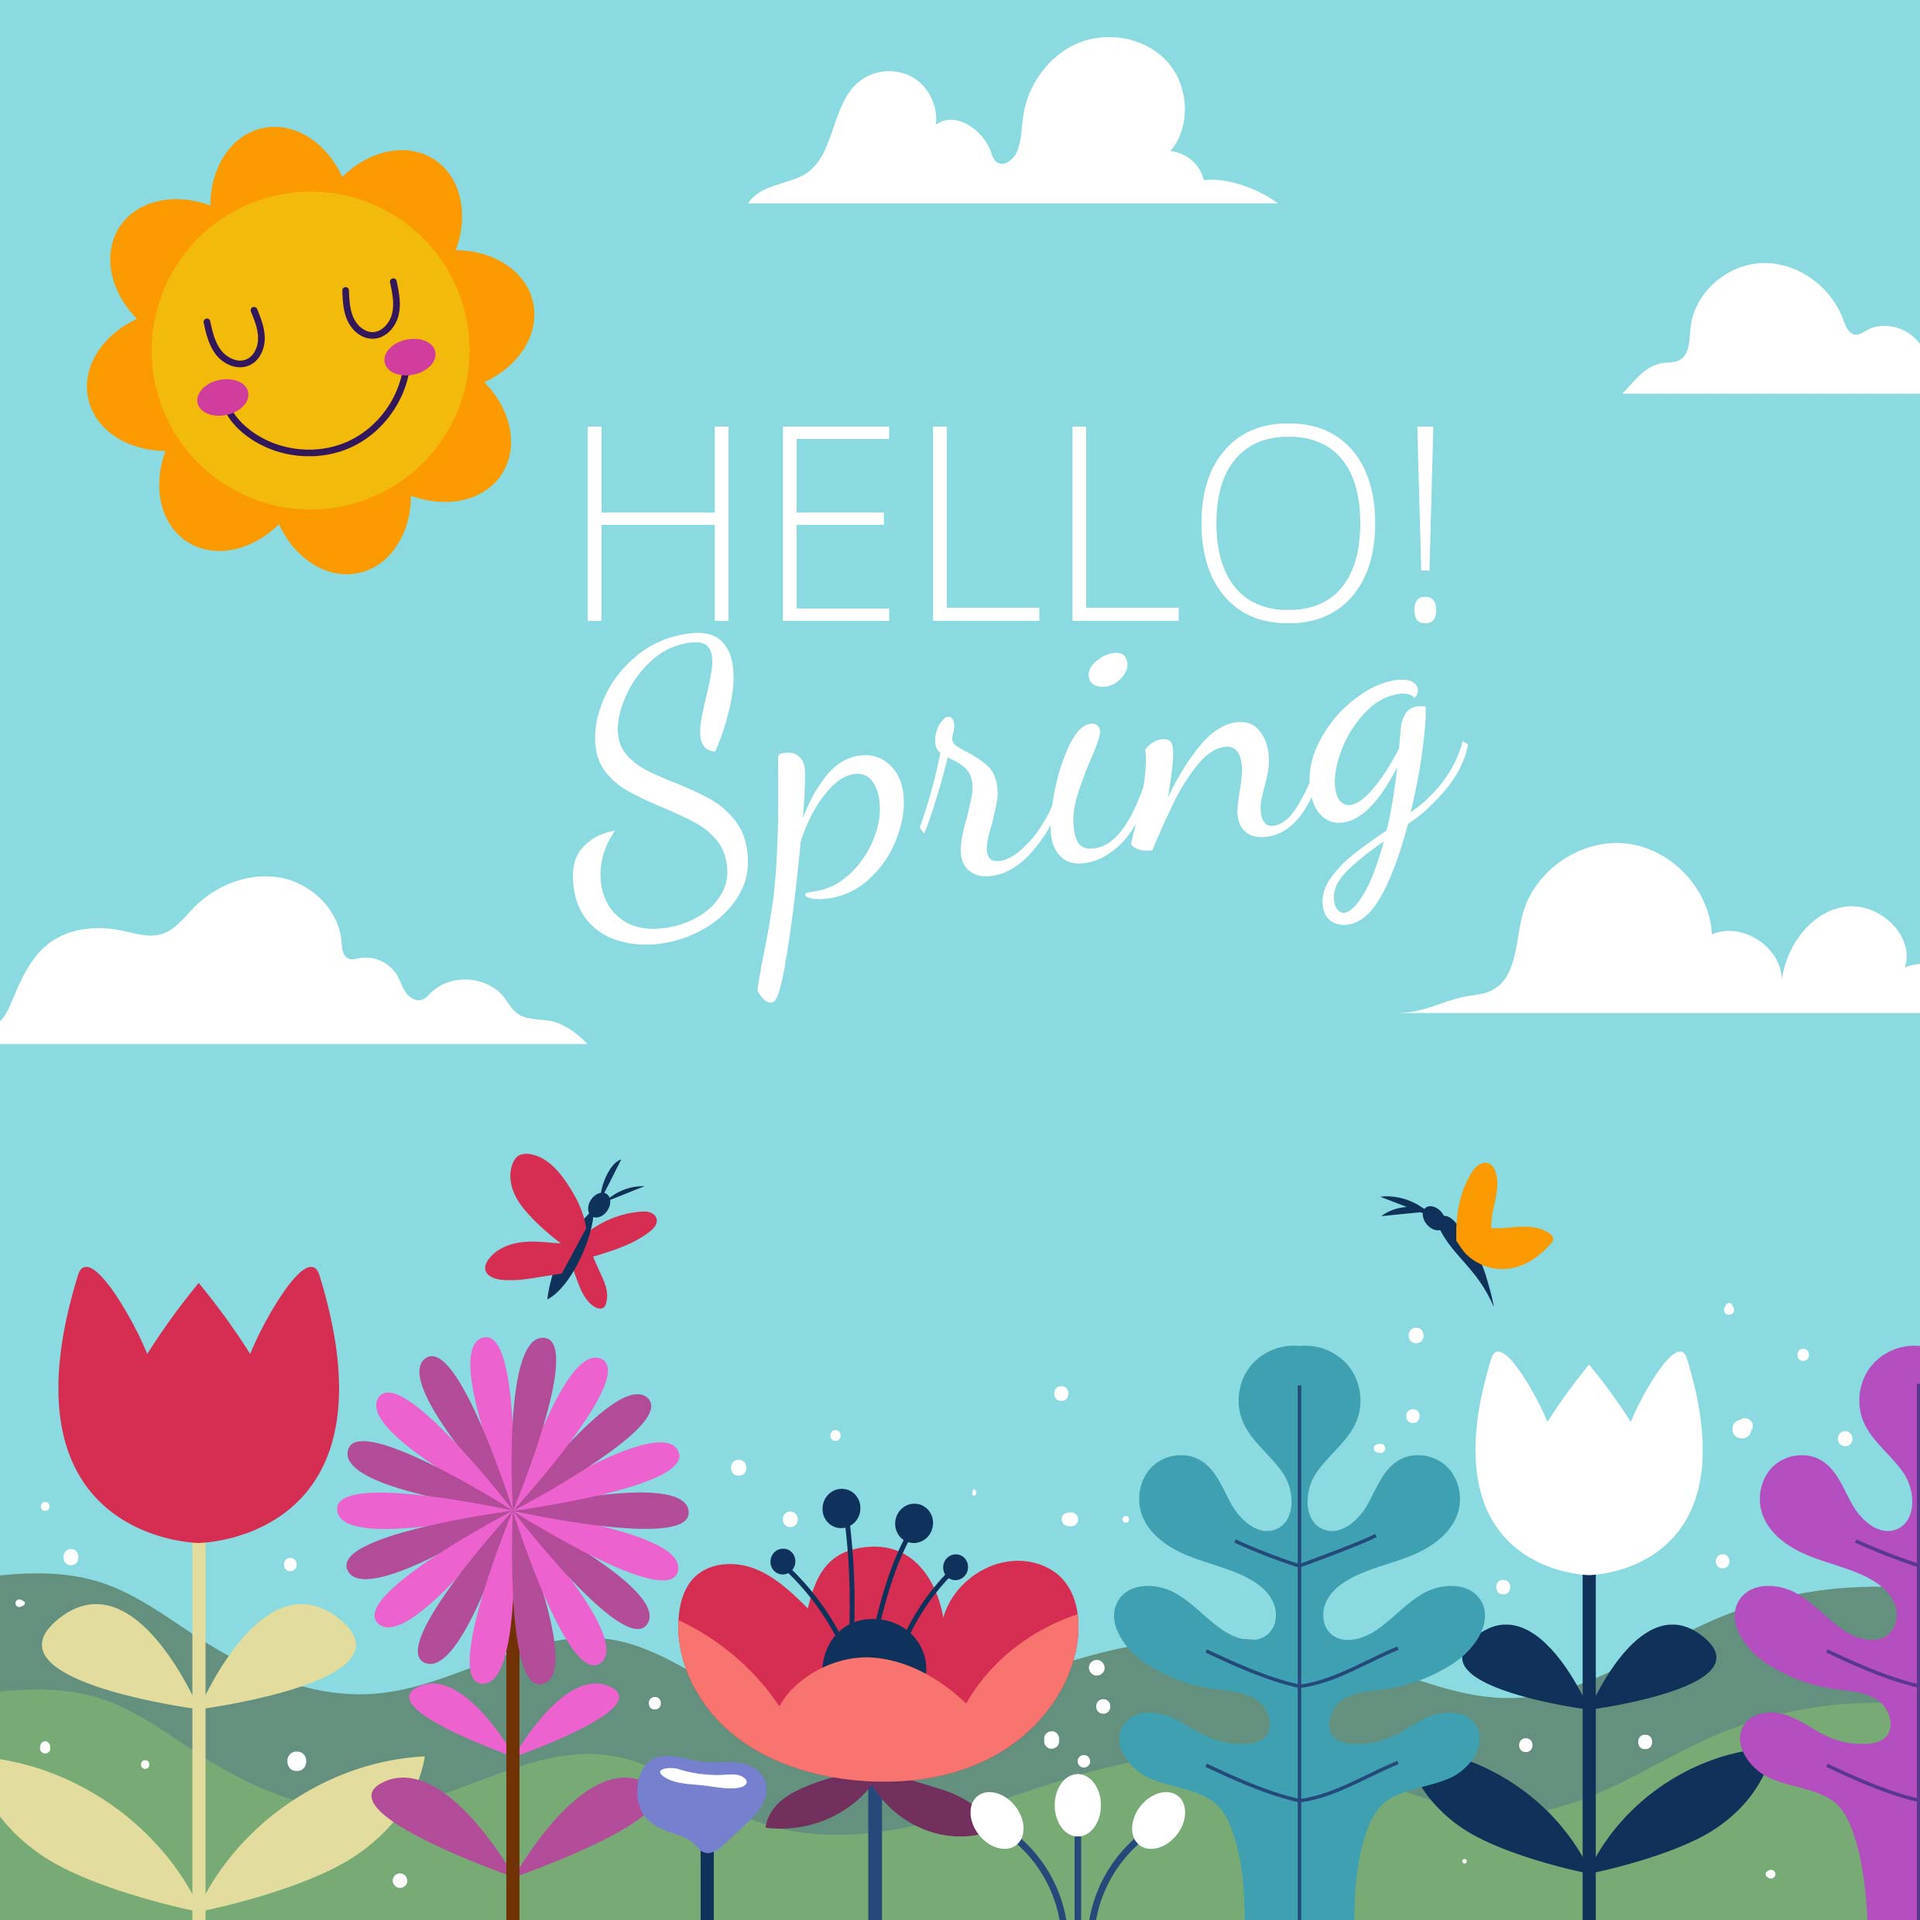 Hello Beautiful Spring Digital Art Wallpaper